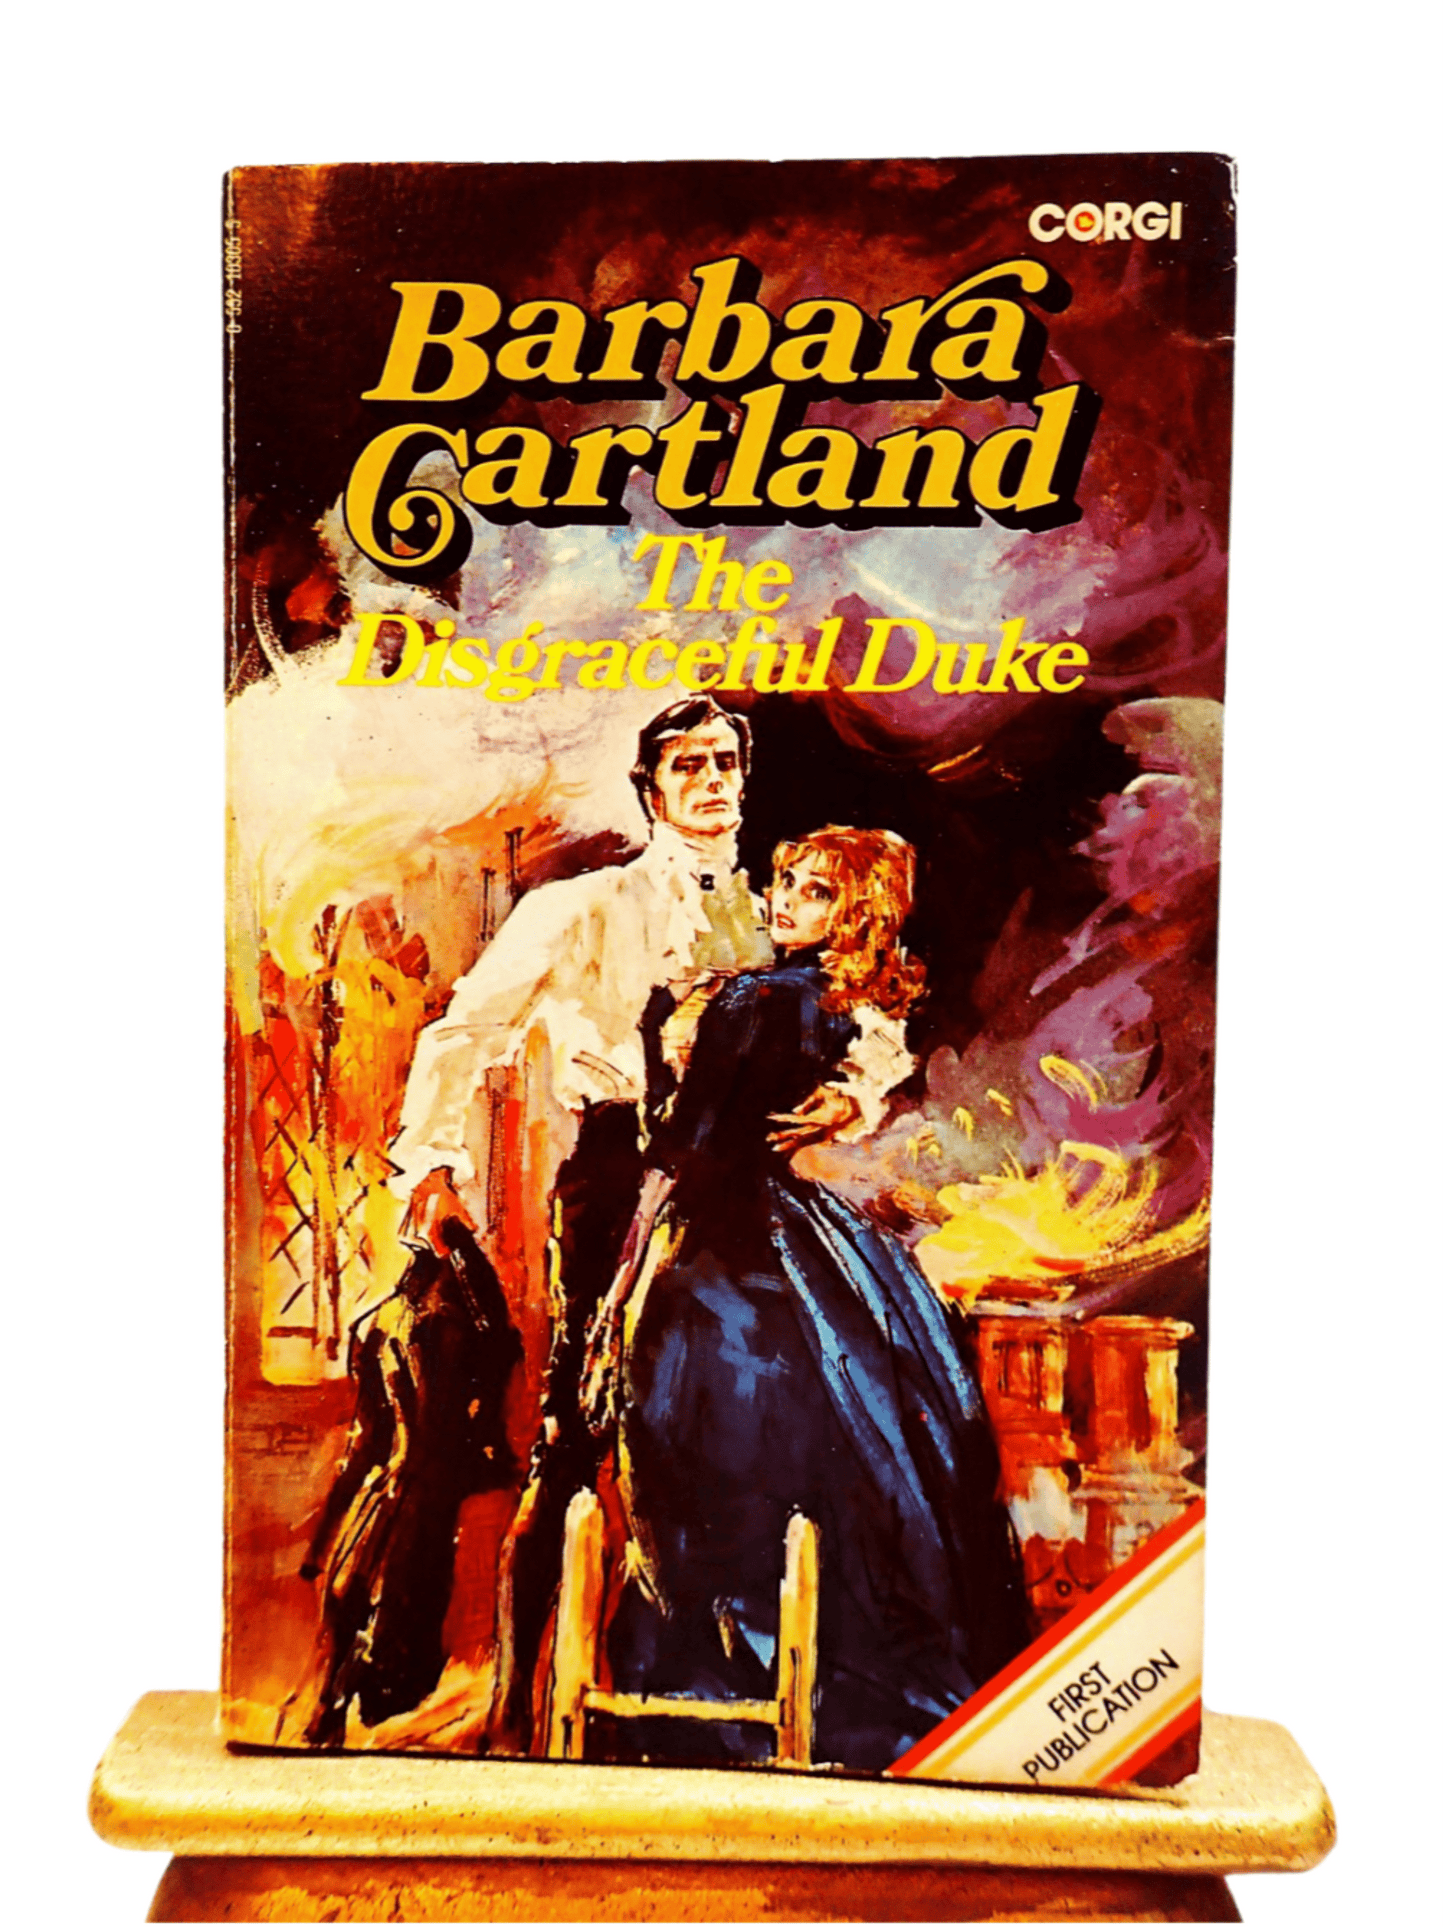 Front cover of The Disgraceful Duke Barbara Cartland Corgi Paperback showing a rakish man embracing a lady in long blue dress against a raging fire.